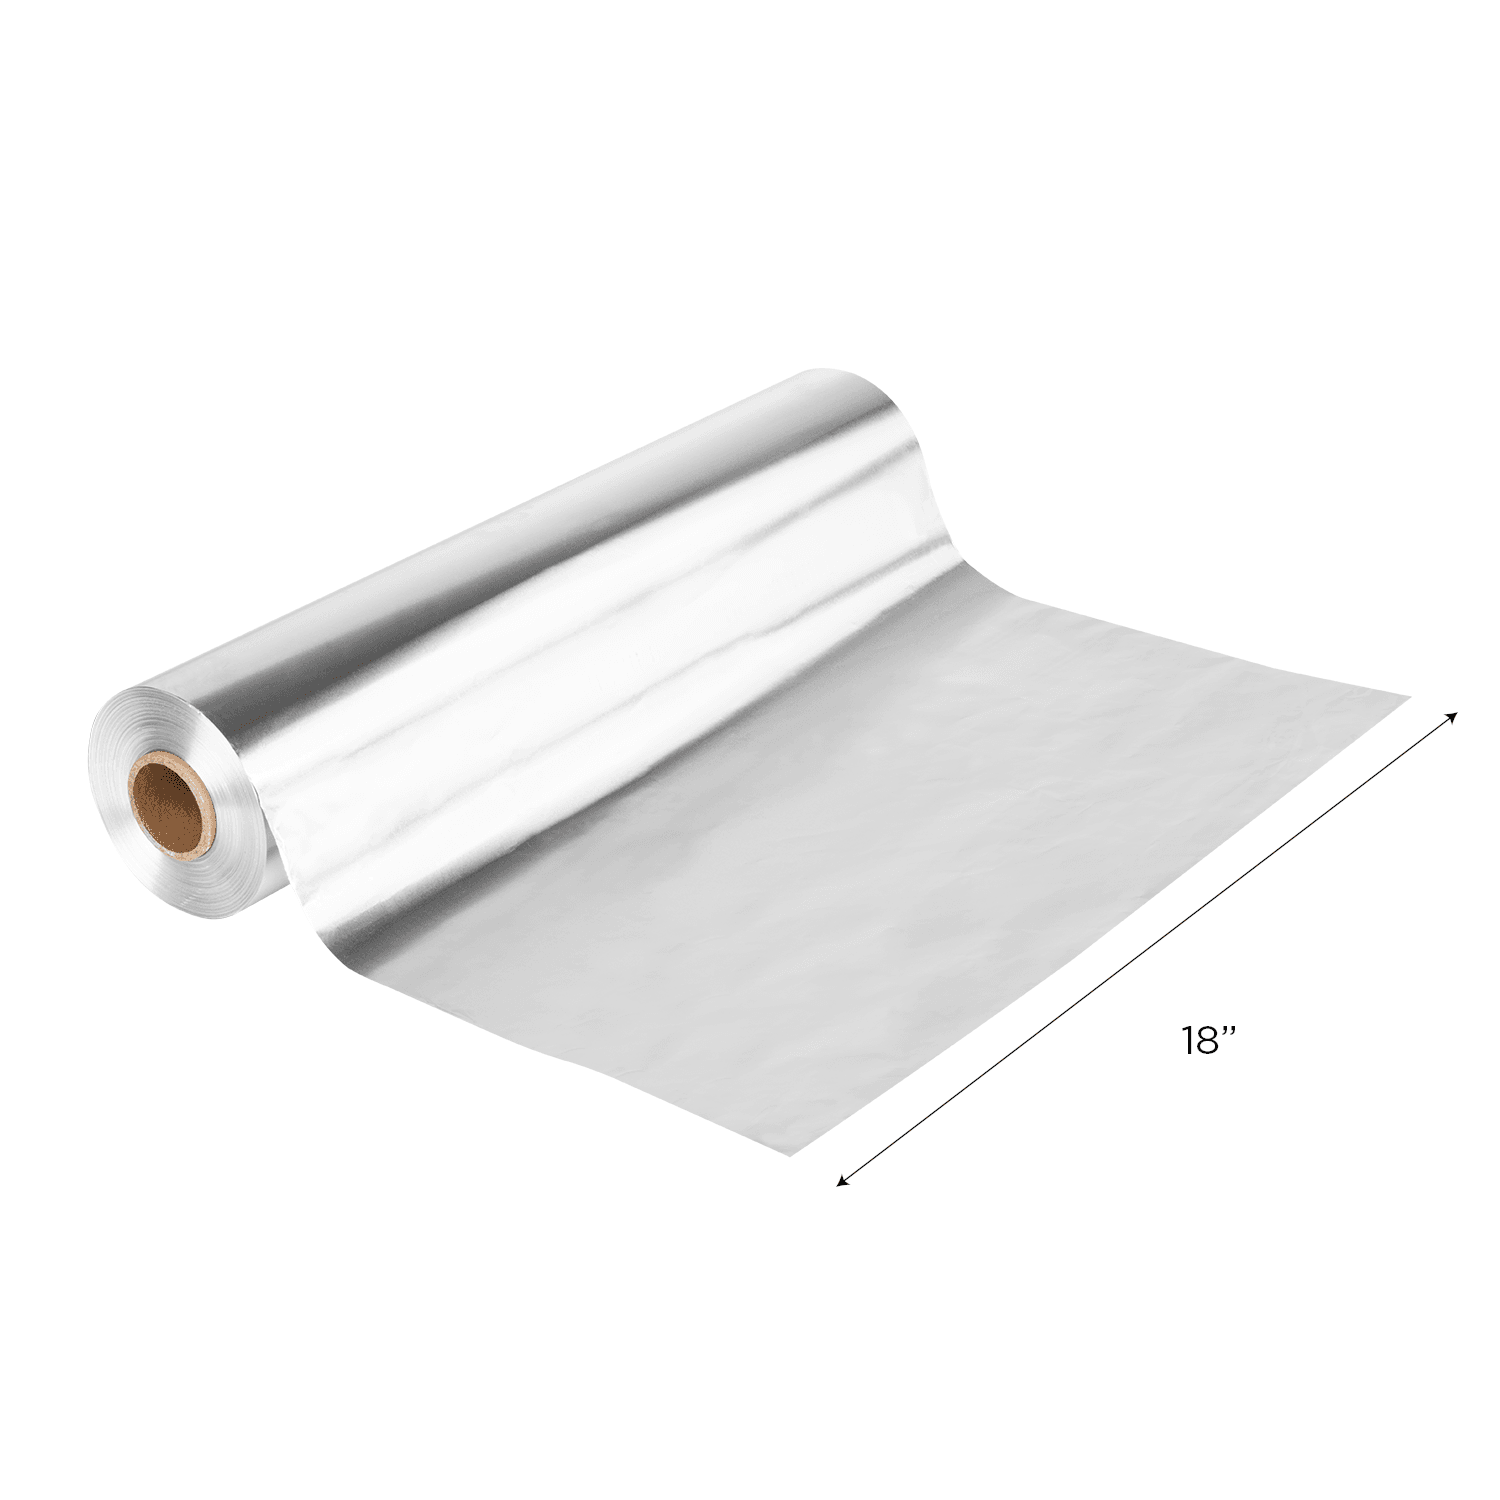 Karat 18” x 1000' Heavy Duty Aluminum Foil Roll with measurements